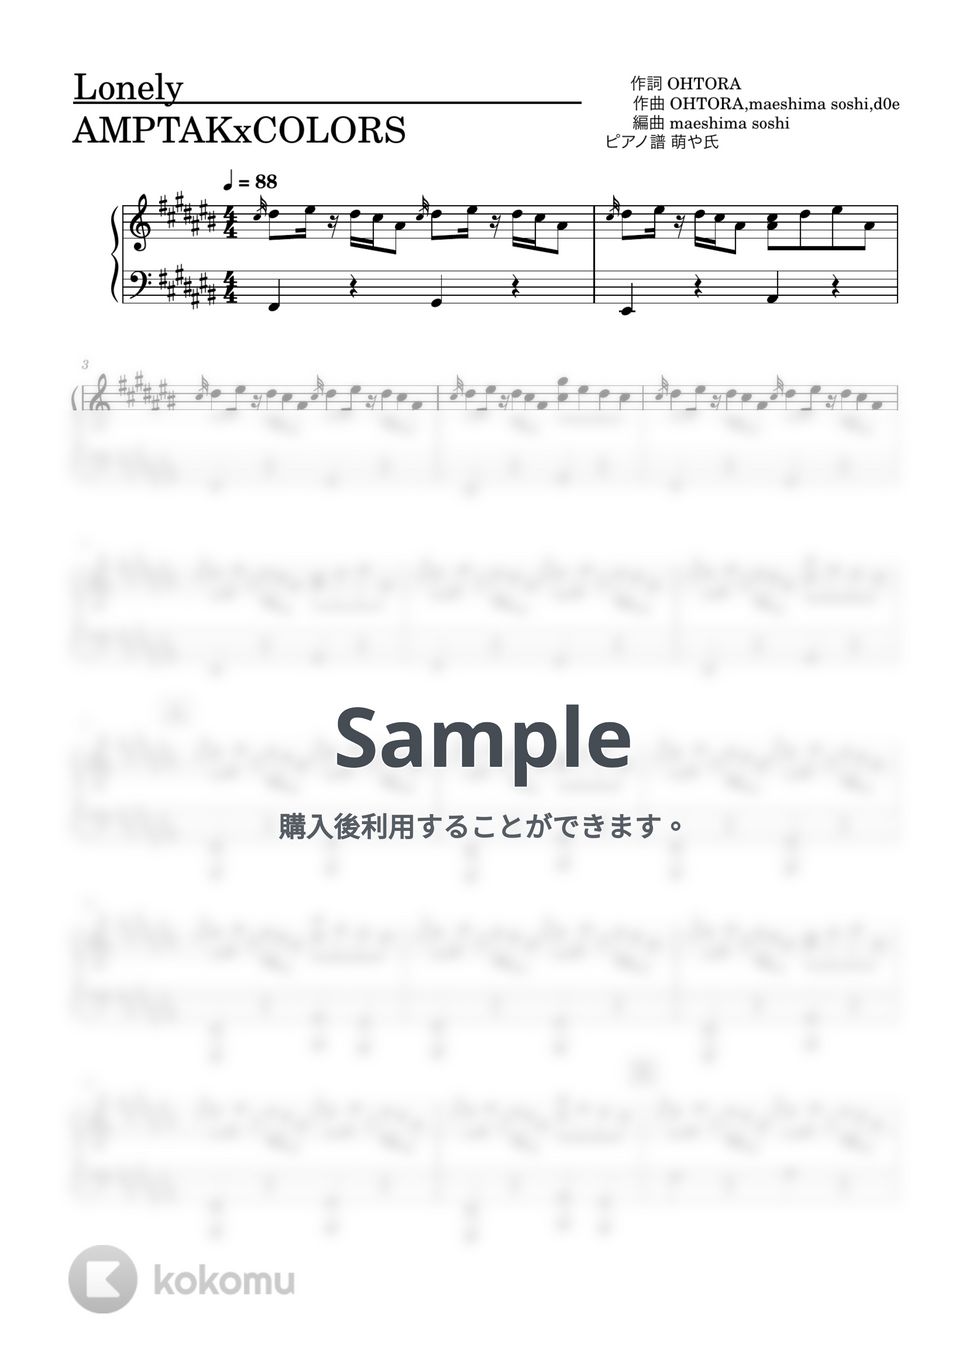 AMPTAK×COLORS - Lonely (ピアノソロ譜) by 萌や氏